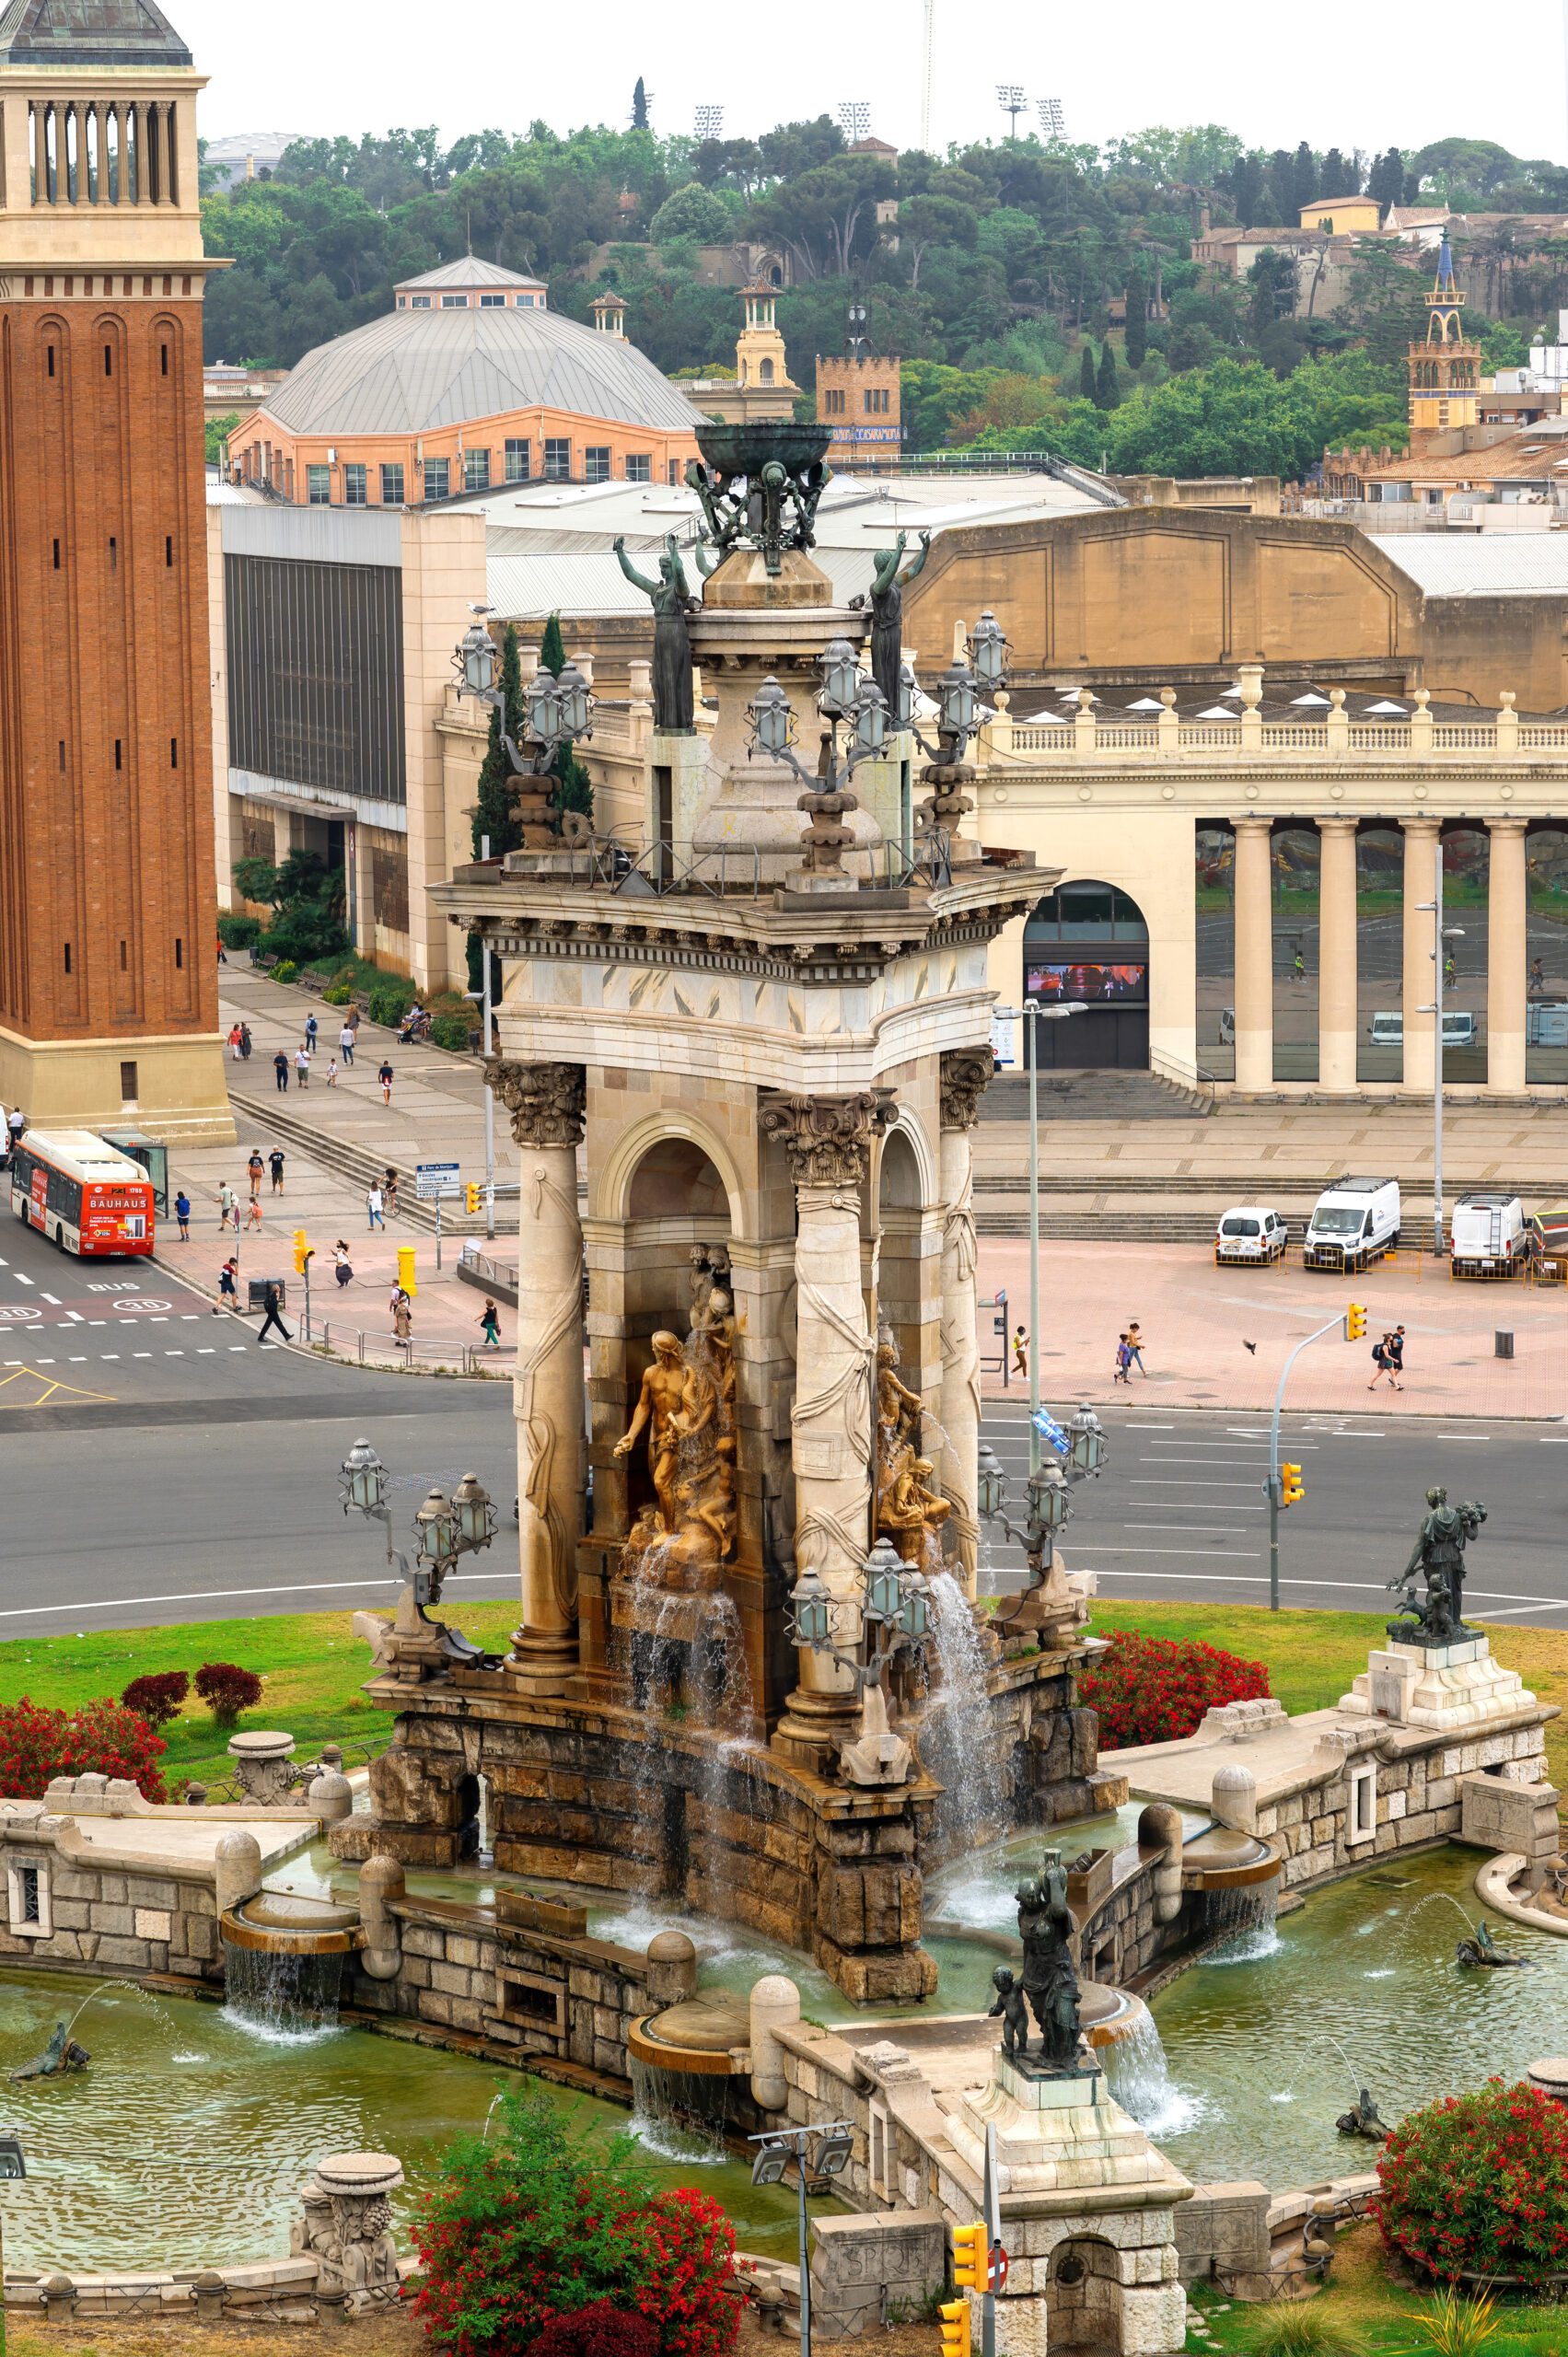 Plaza de Espana, the monument with fountain in Barcelona